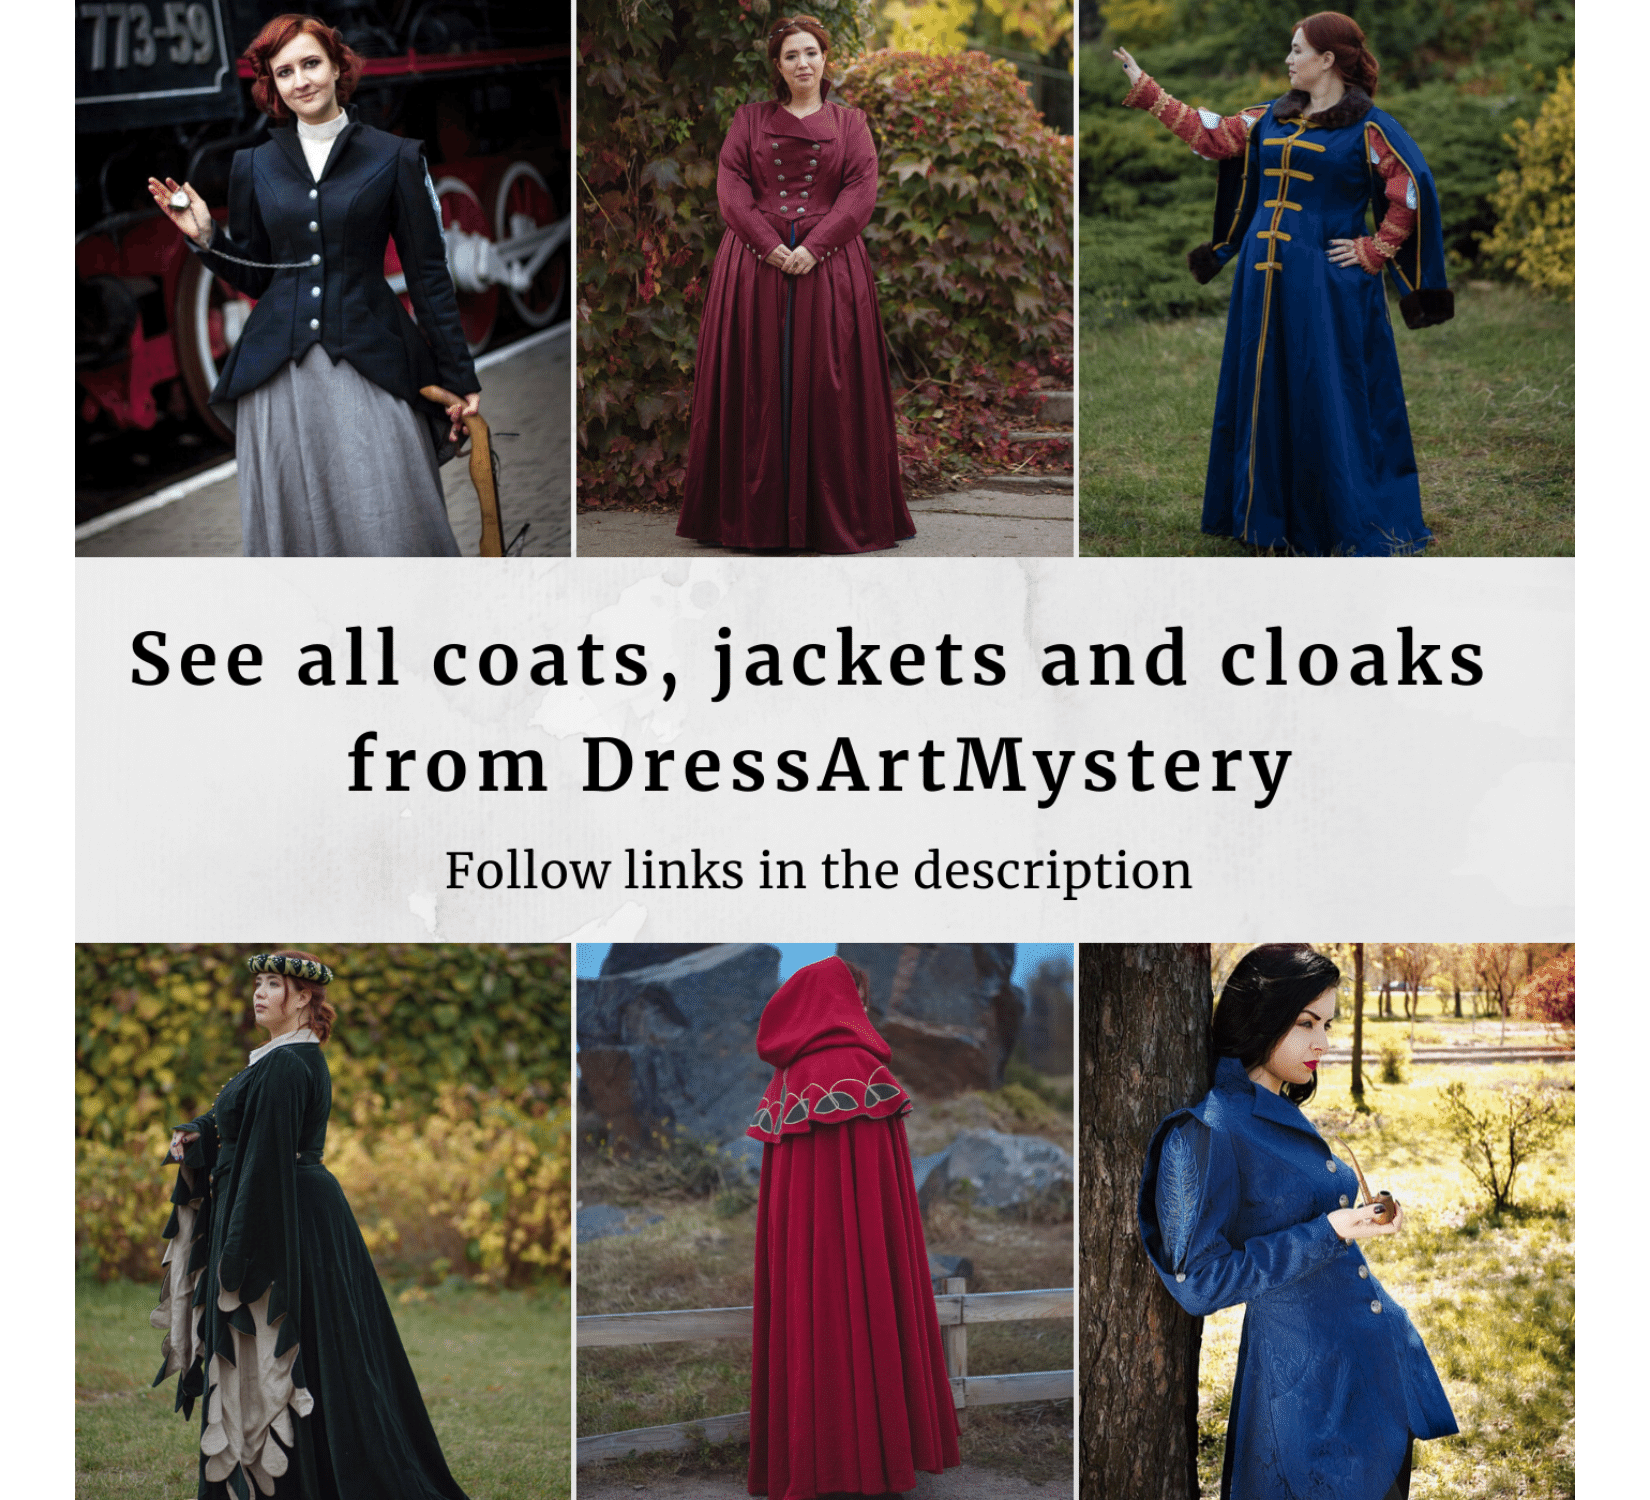 Medieval Dress, Fantasy Gown, Medieval Renaissance Dress, Medieval Wedding  Dress, Sansa Cosplay Gown, Renaissance Fair, Fantasy Dress -  Israel